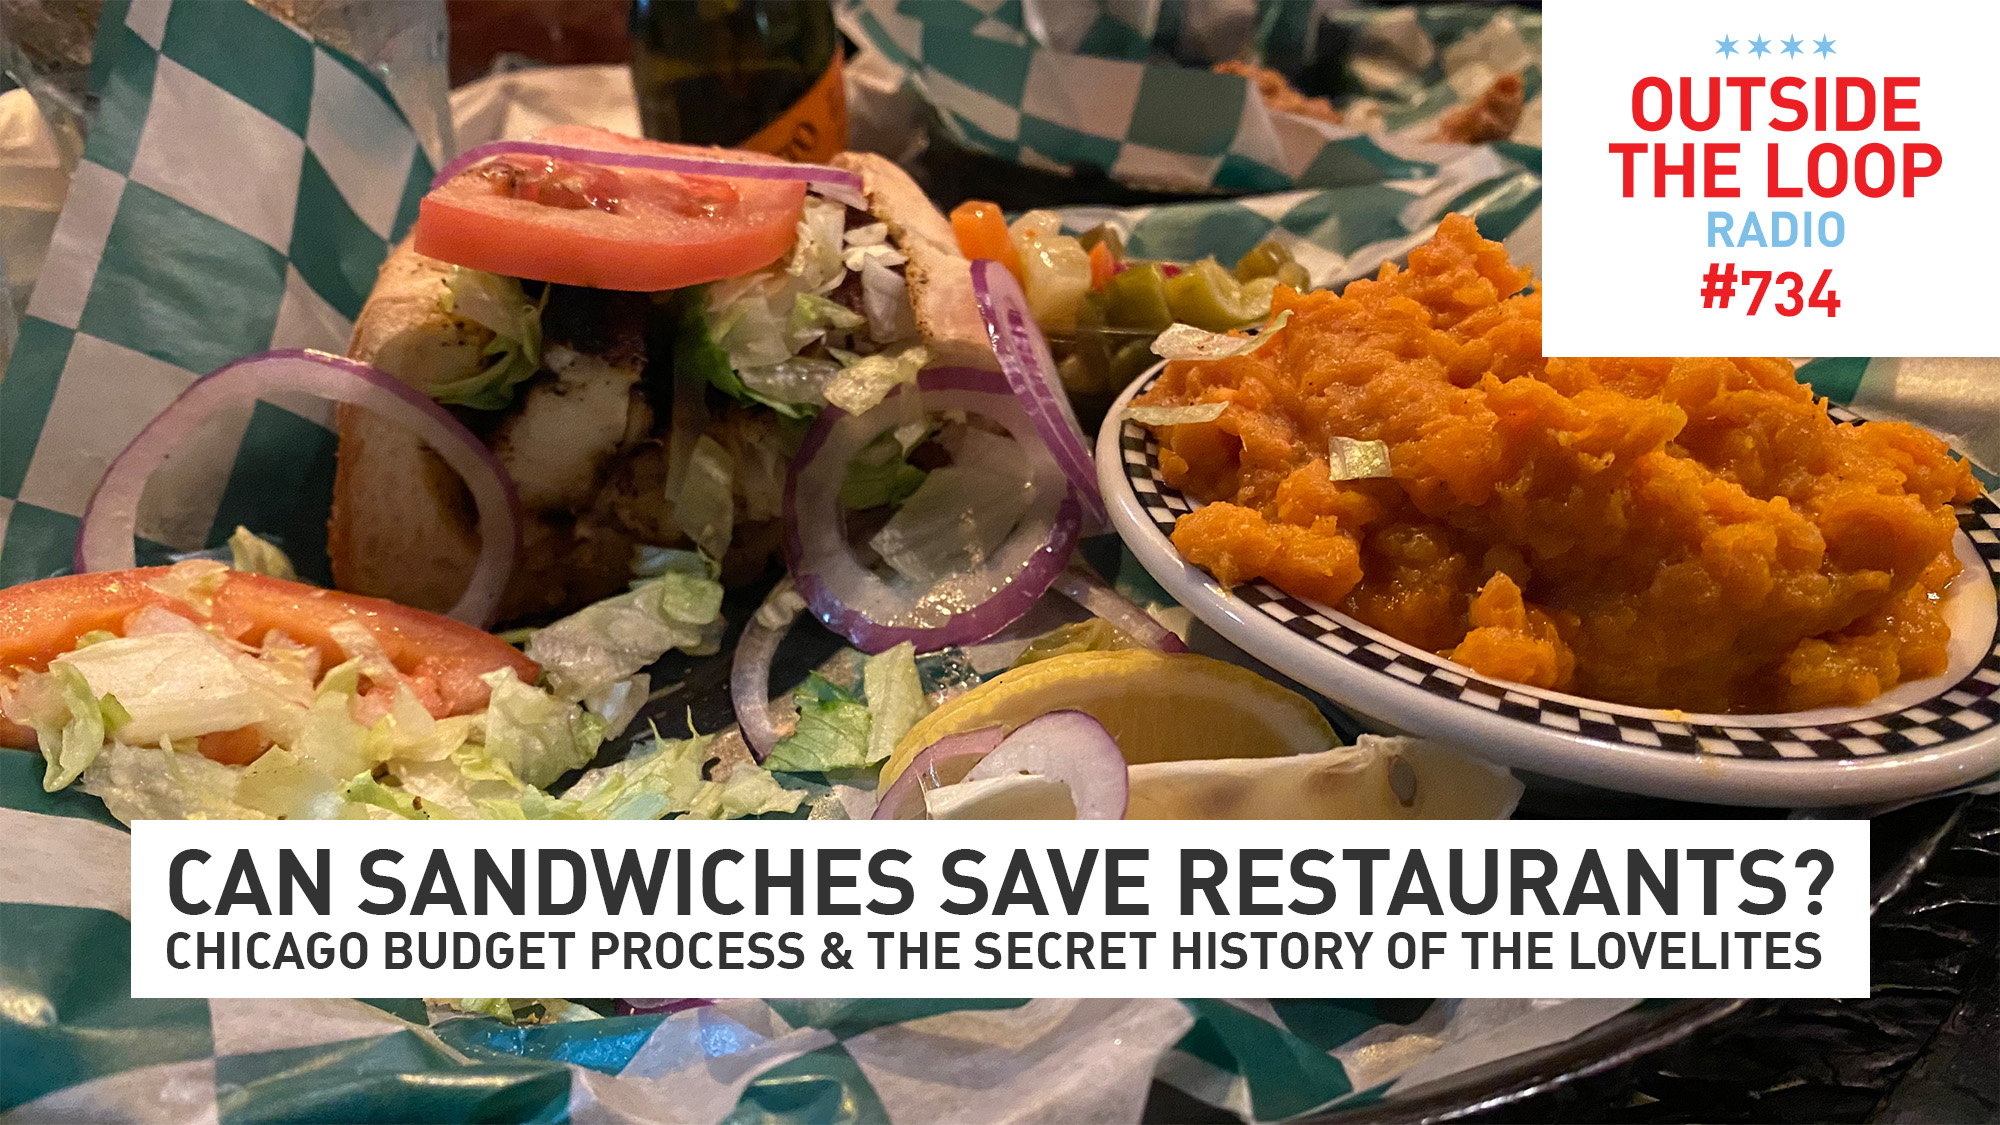 Sandwiches rule!